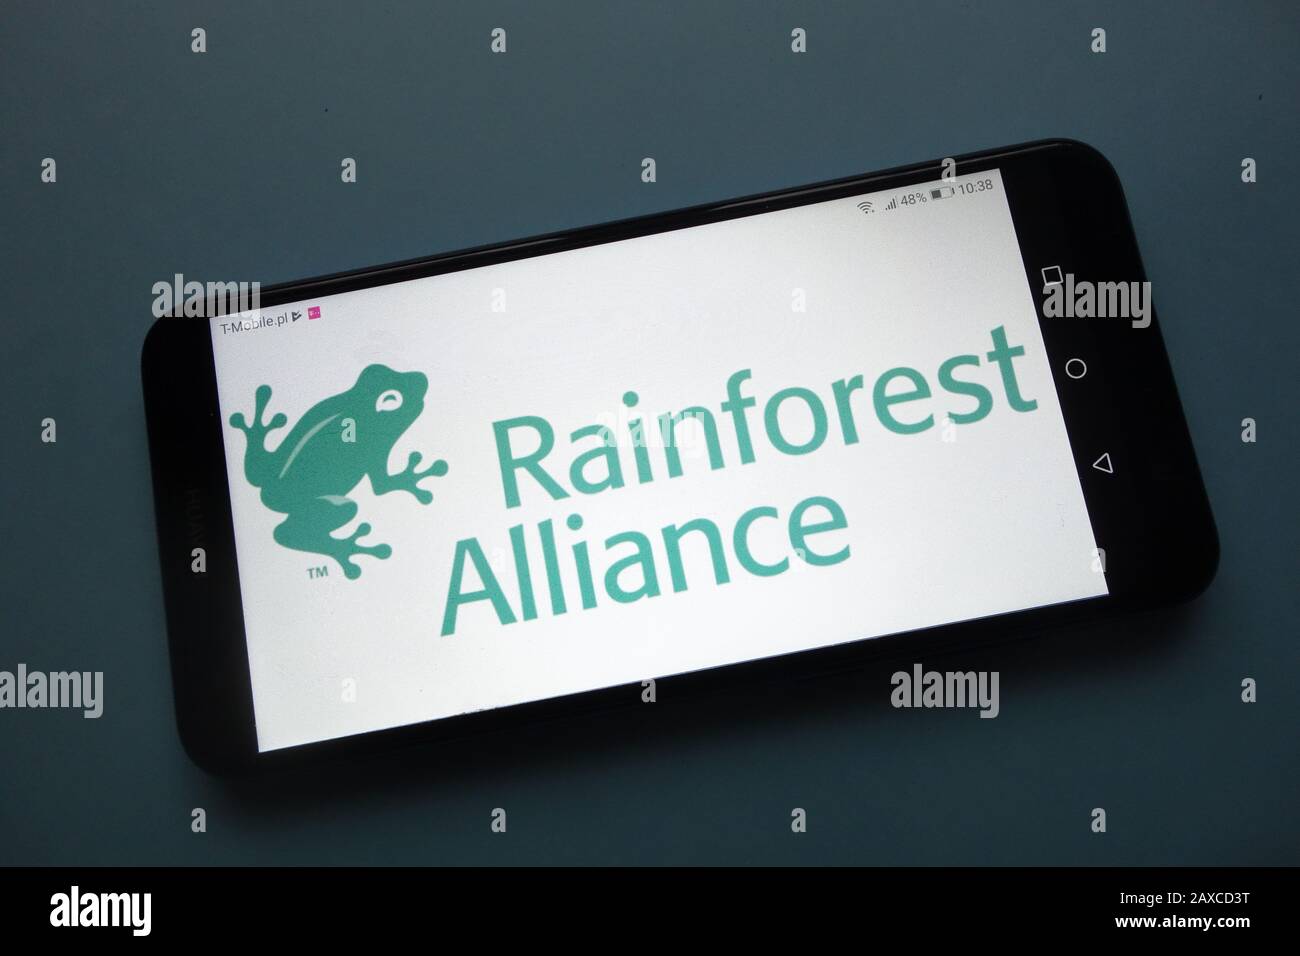 Rainforest Alliance logo on smartphone Stock Photo